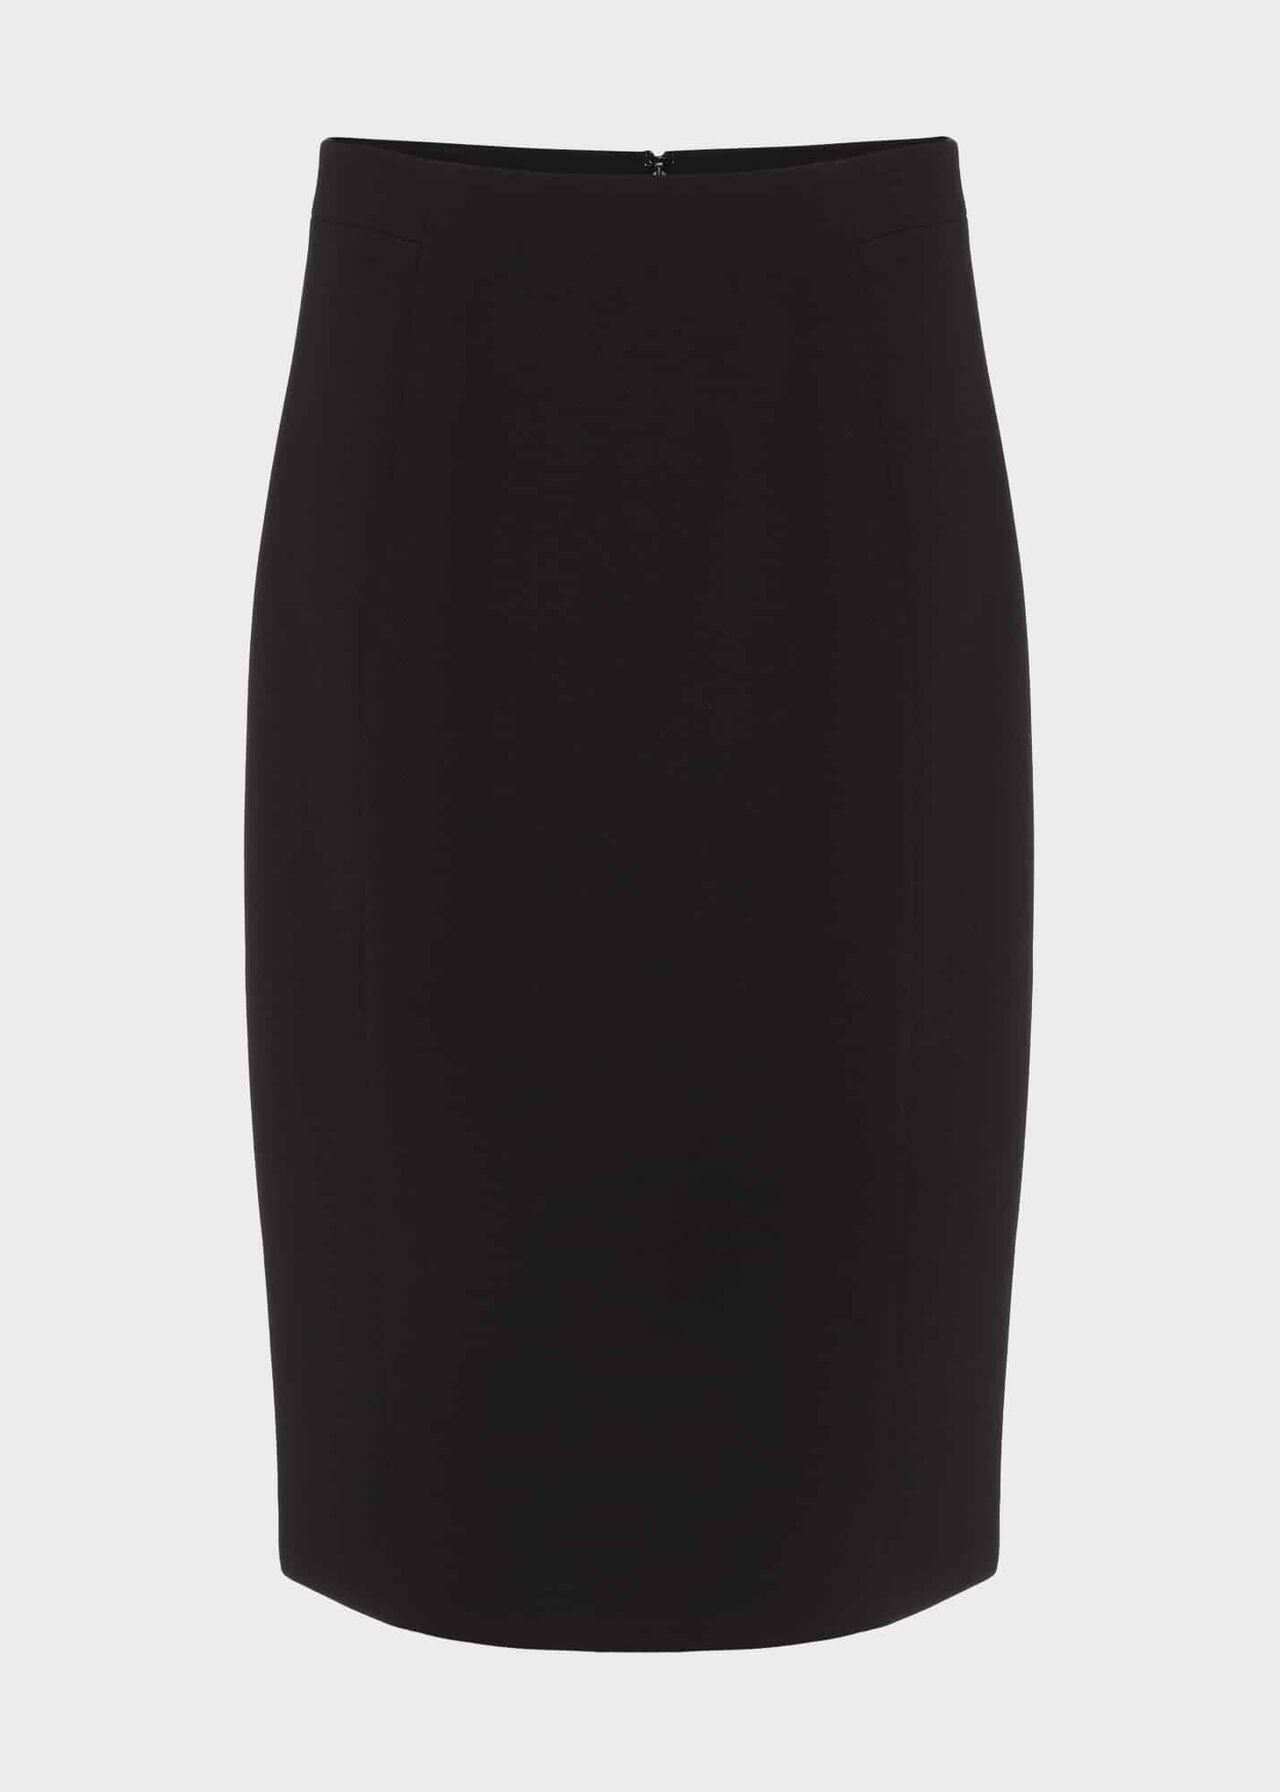 Ophelia Pencil Skirt, Black, hi-res